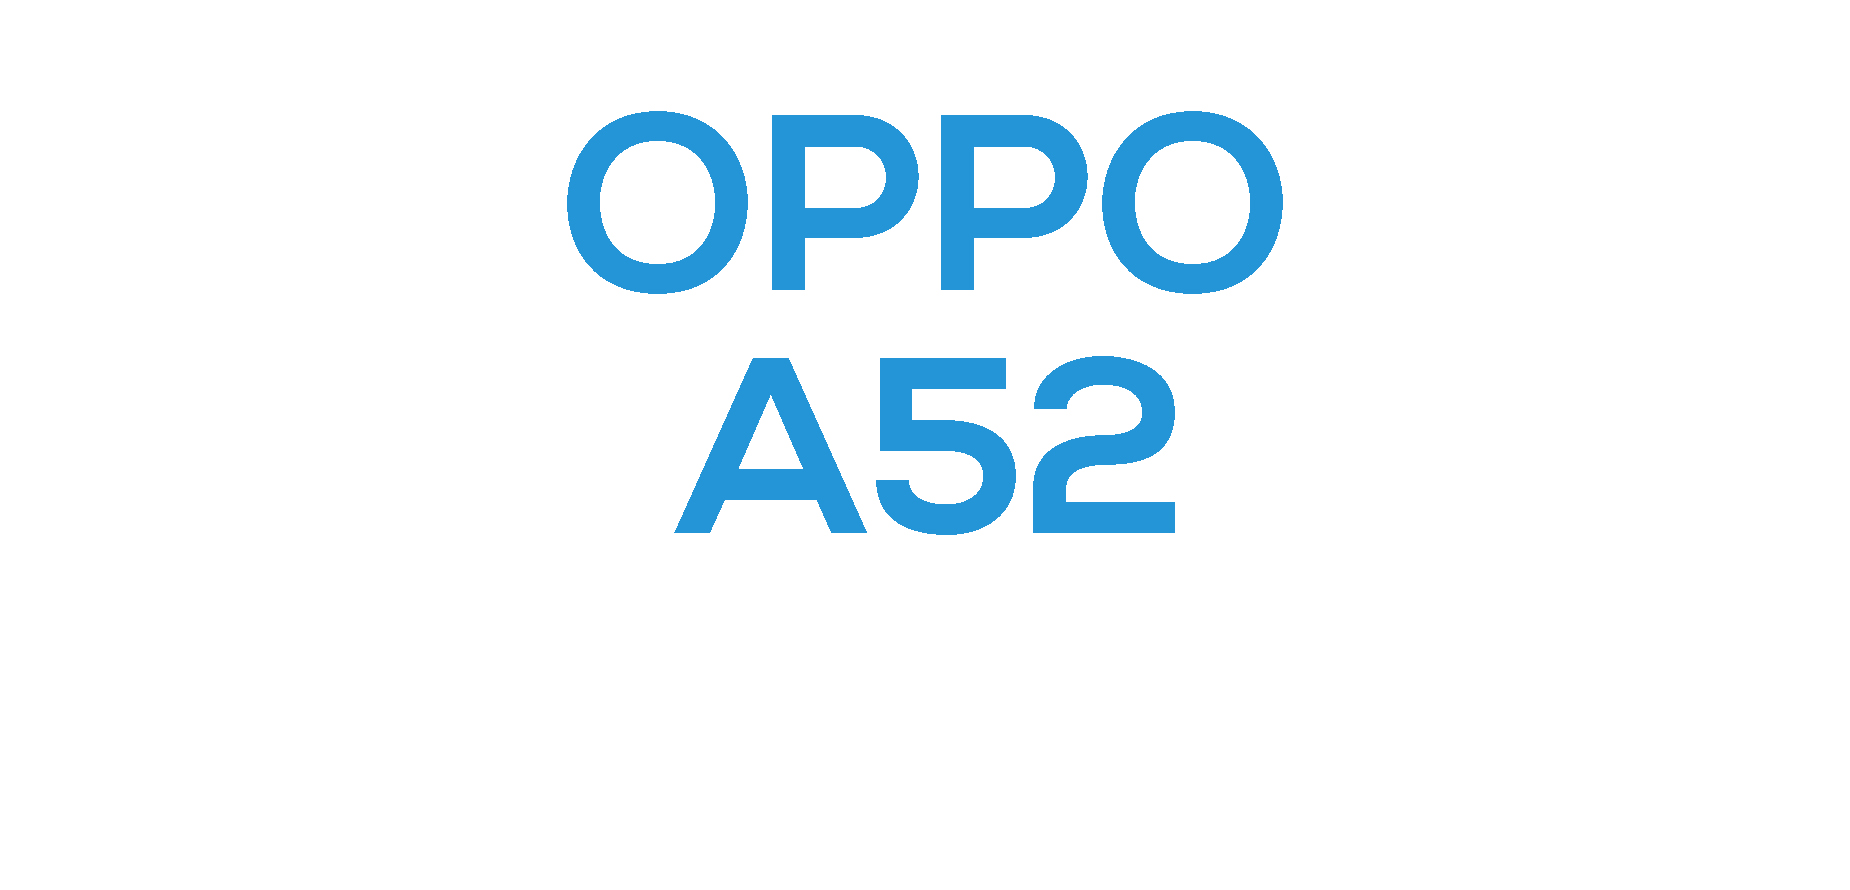 OPPO A52